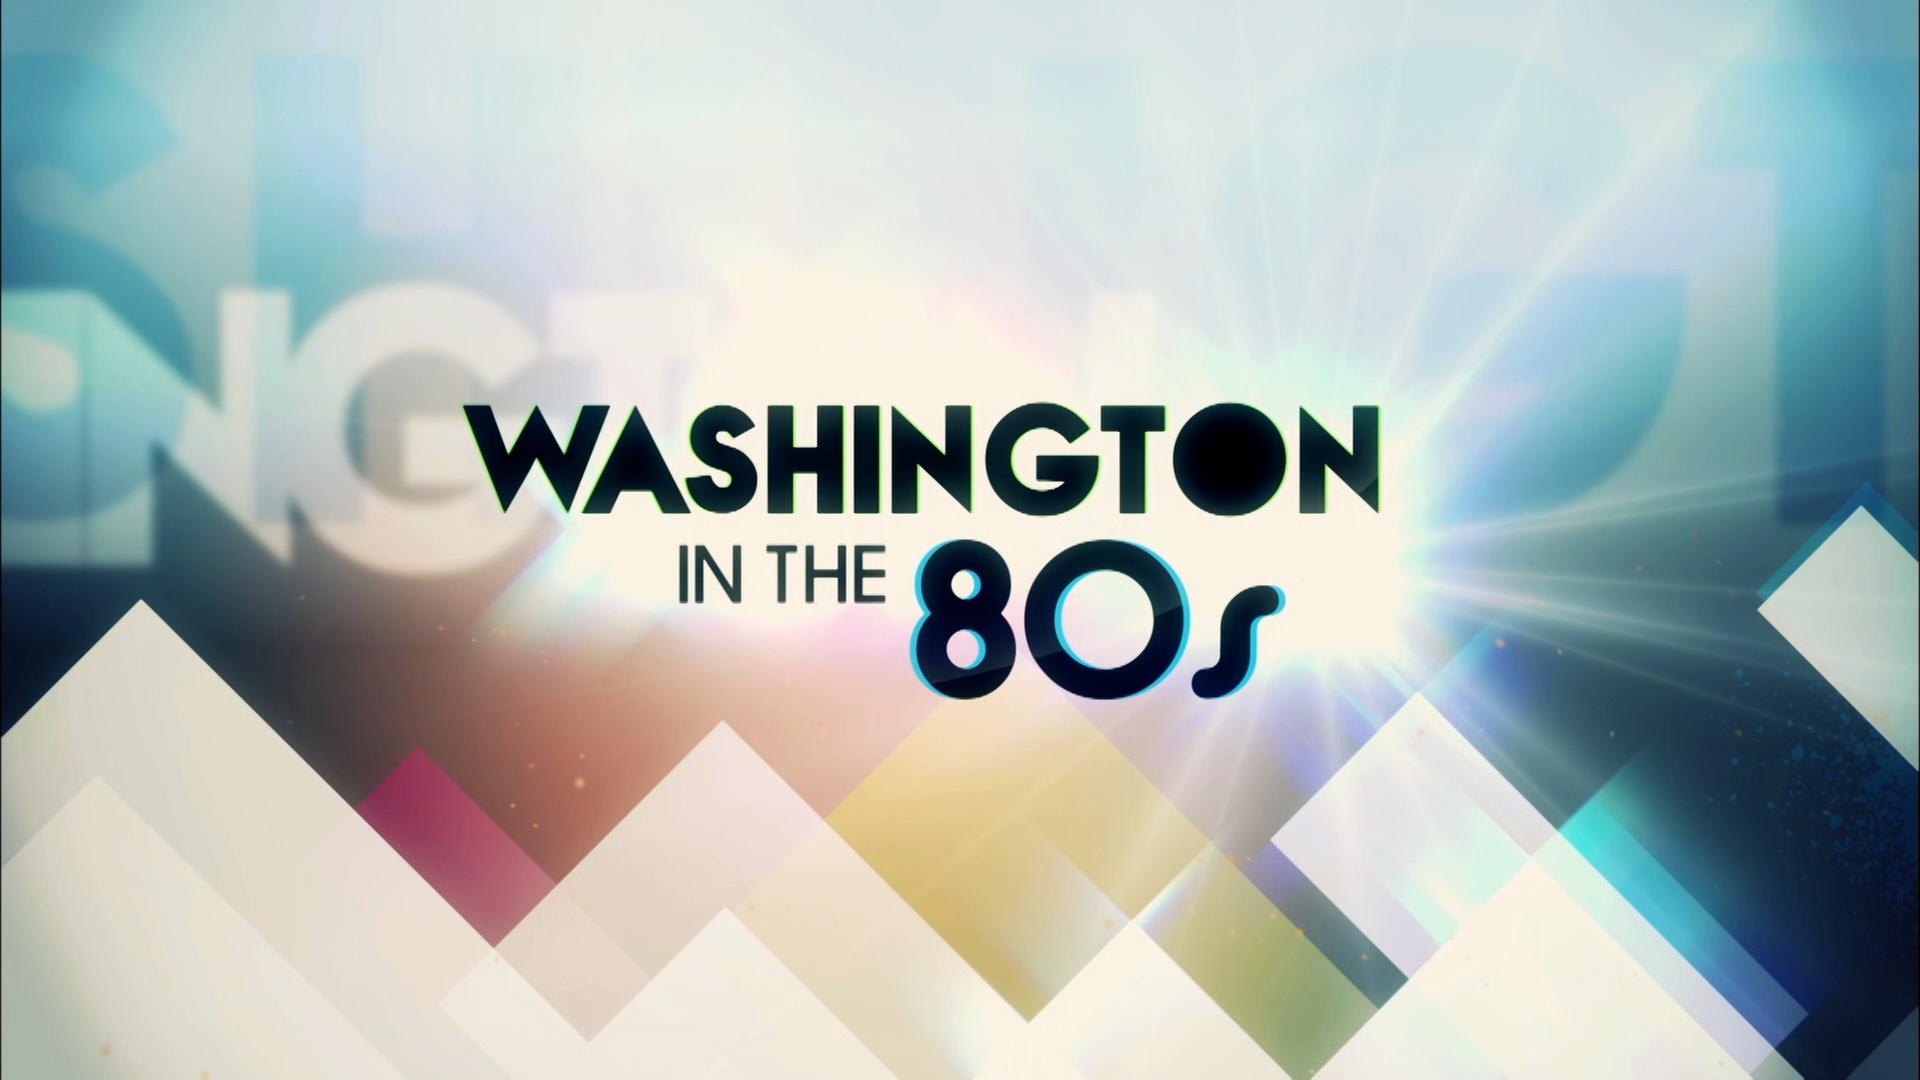 Washington in the 80s